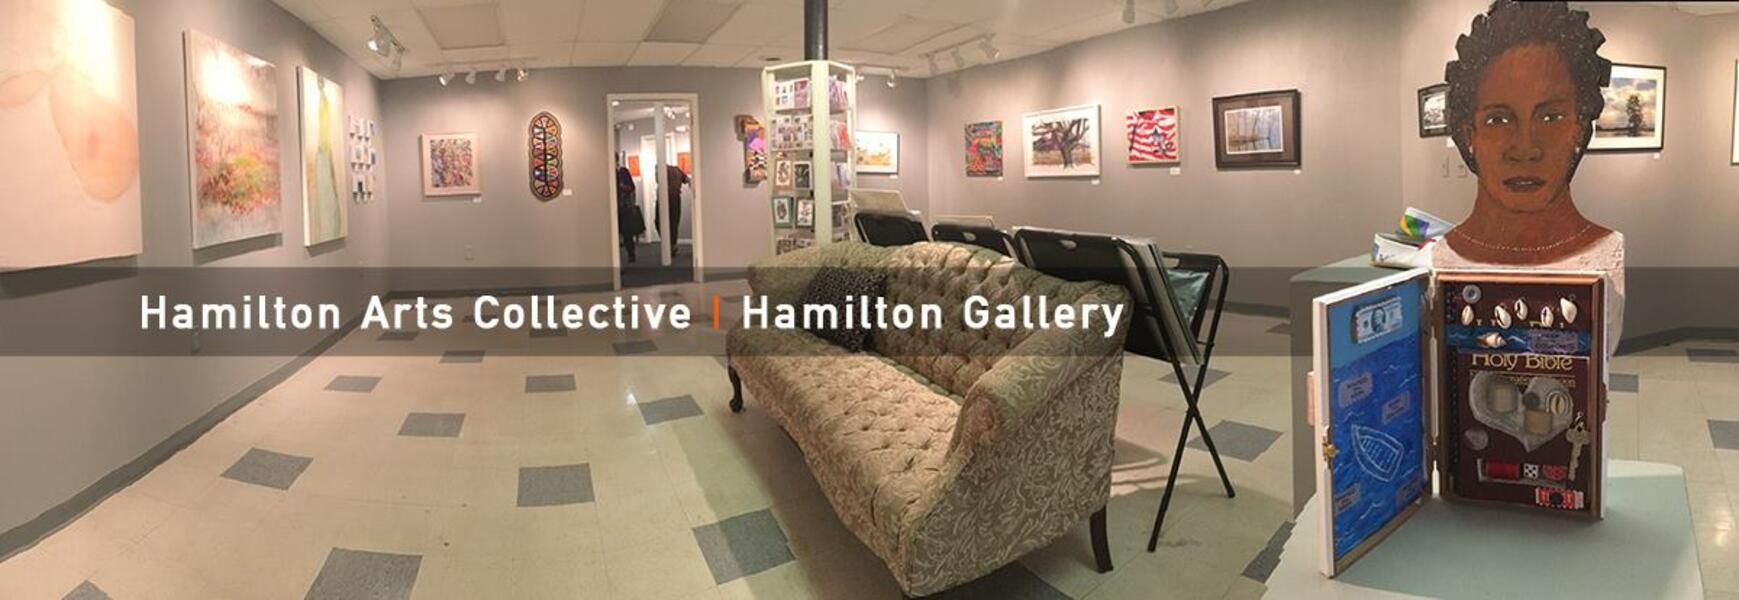 panoramic view of Hamilton Gallery